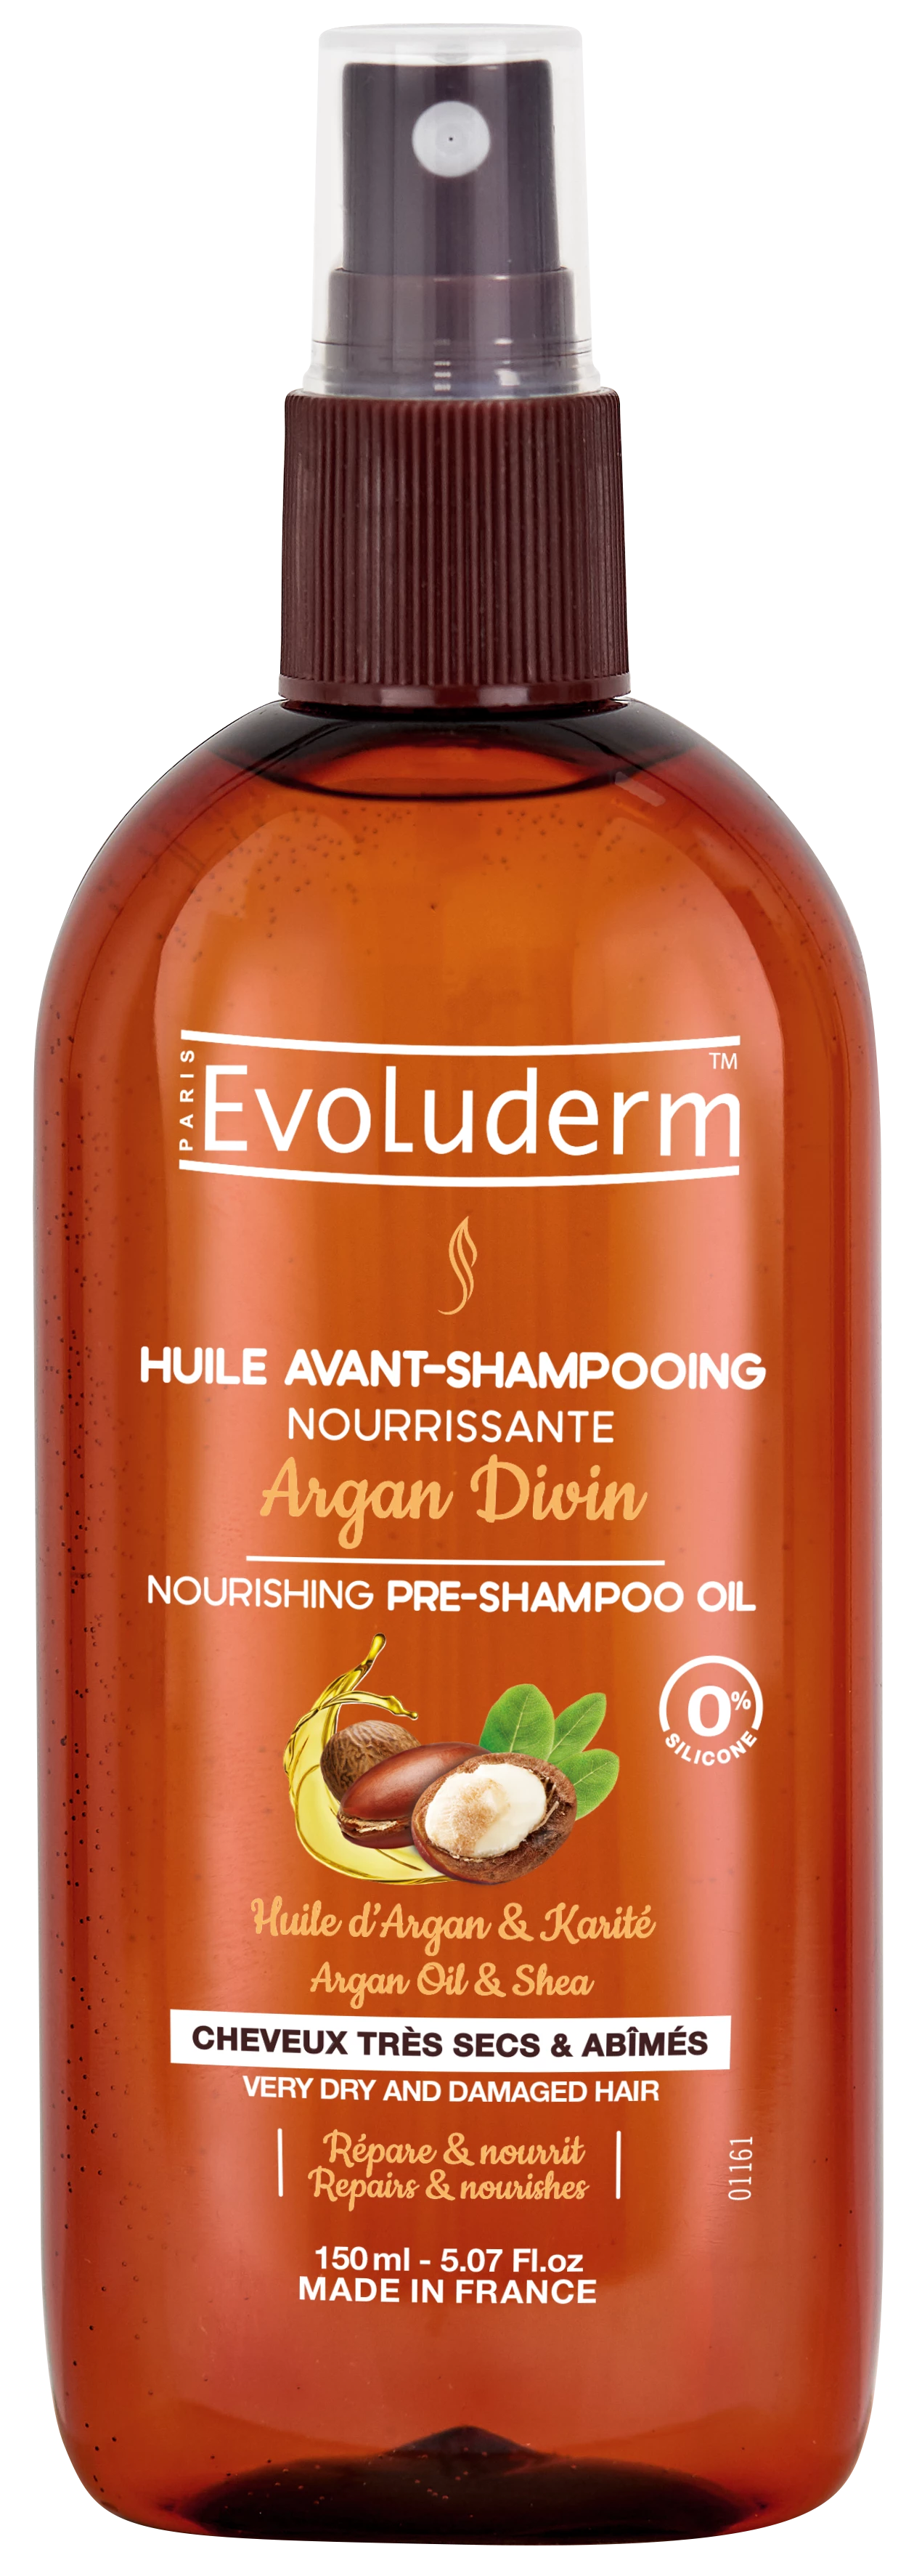 Nourishing Pre-Shampoo with Divine Argan Oil, 150ml - EVOLUDERM